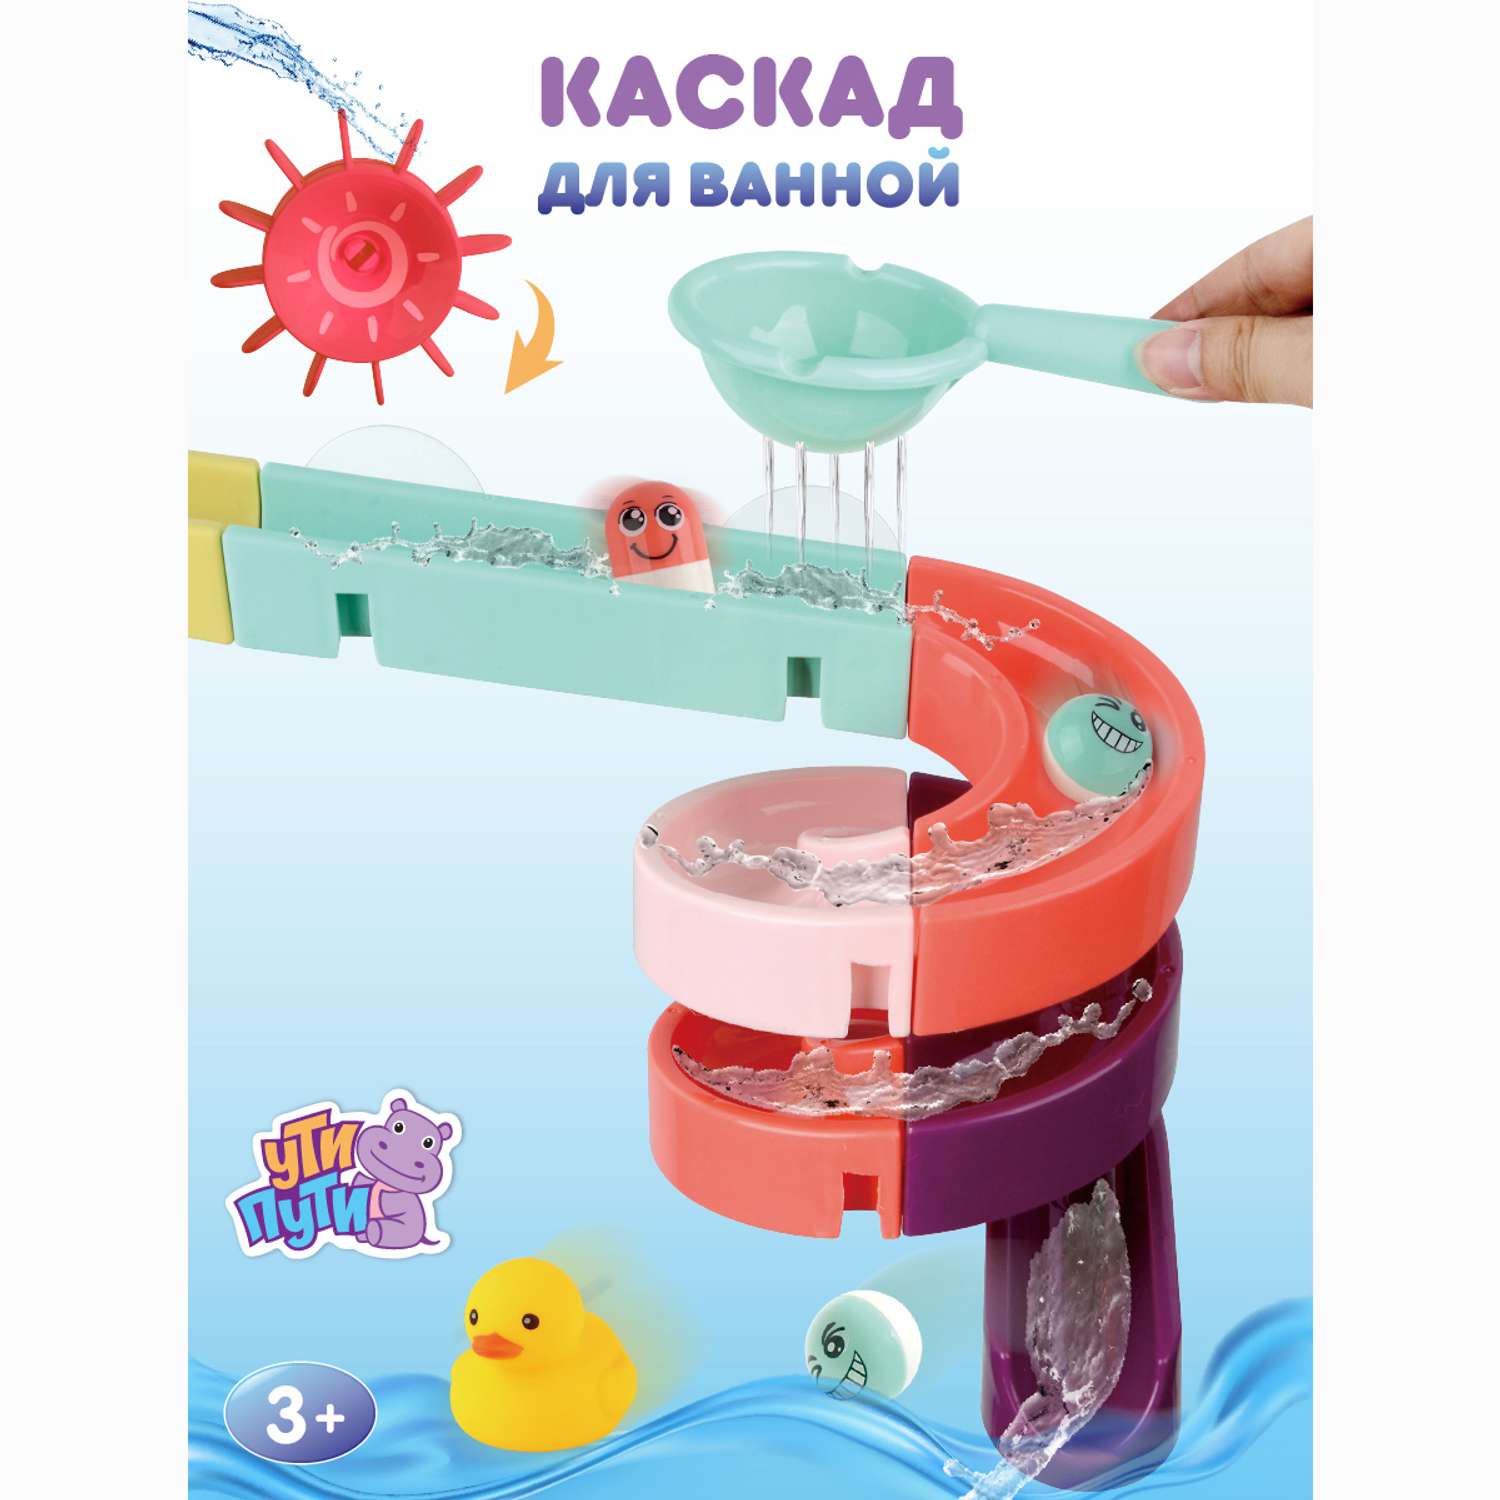 Игрушка для ванны Ути Пути Каскад - фото 1